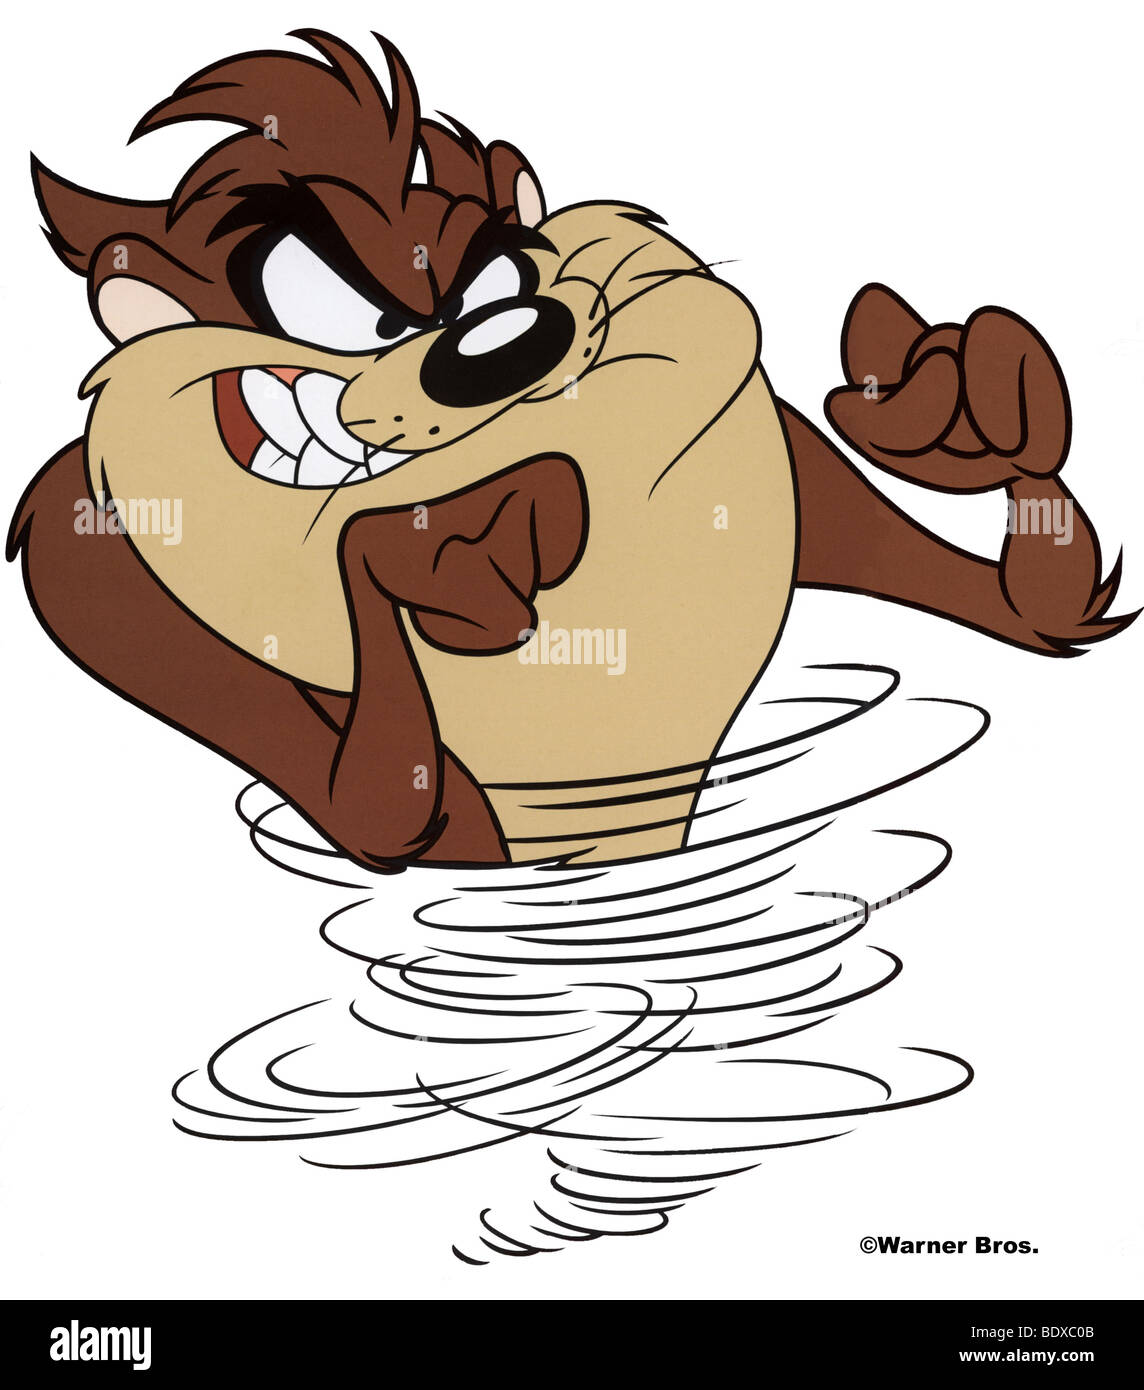 Image result for tasmanian devil cartoon